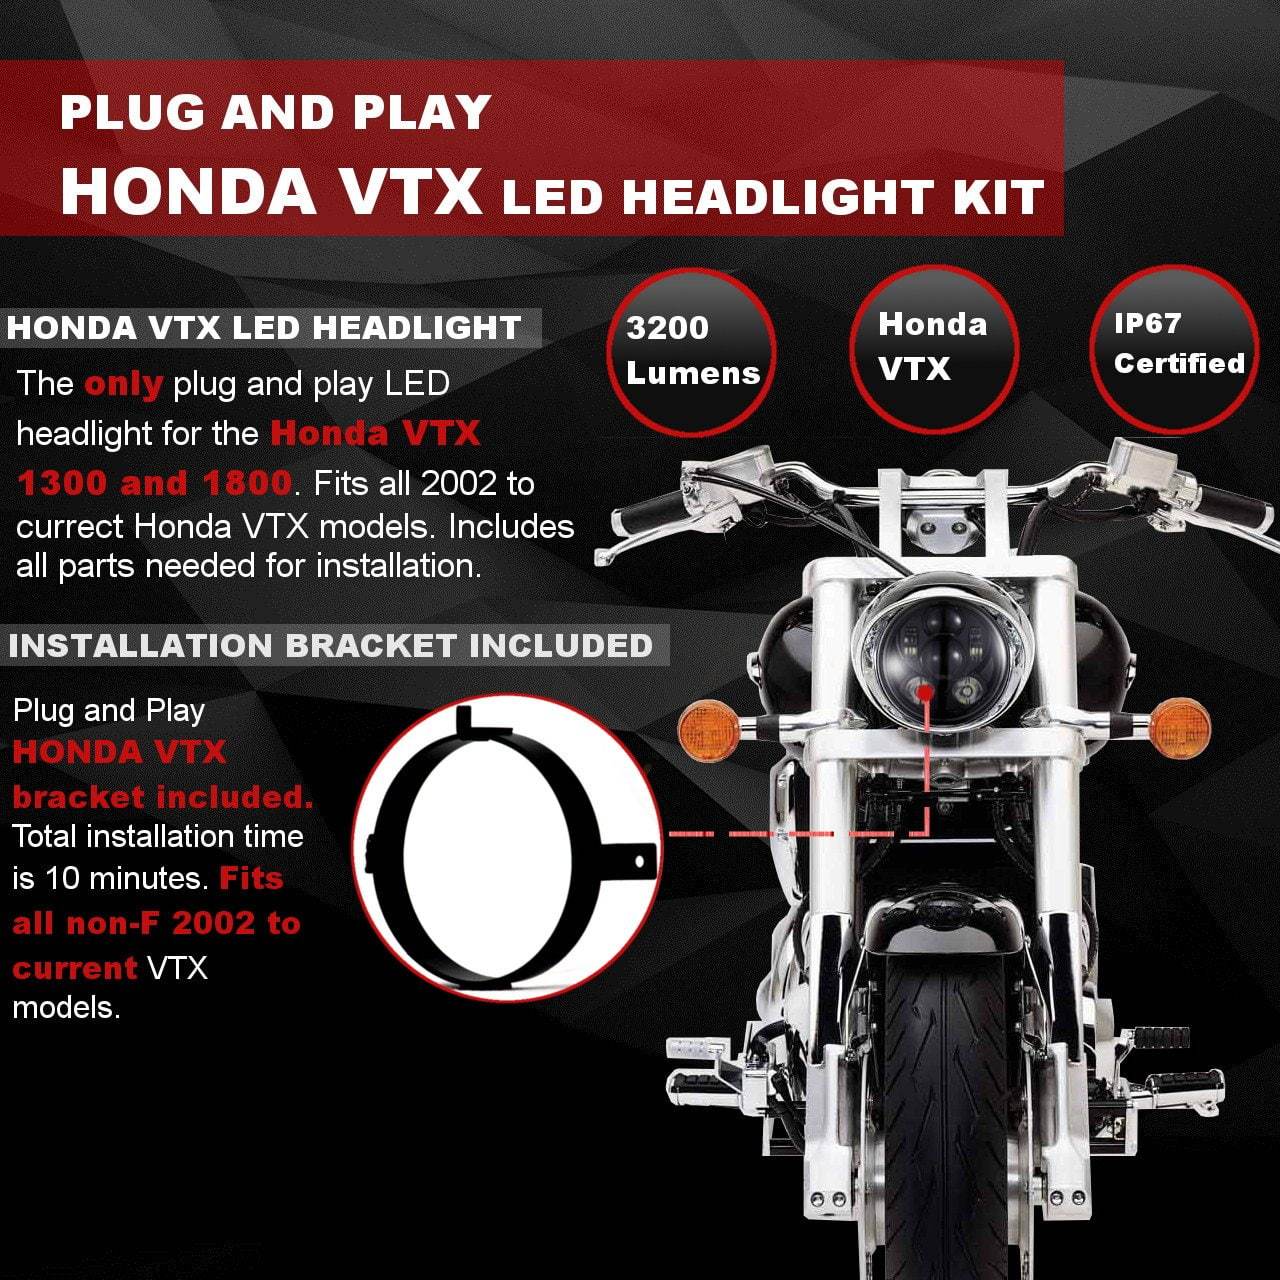 Honda VTX LED Headlights - Eagle Lights Generation III LED Headlight For Honda VTX 1300 And 1800 - Includes VTX Bracket And Hardware